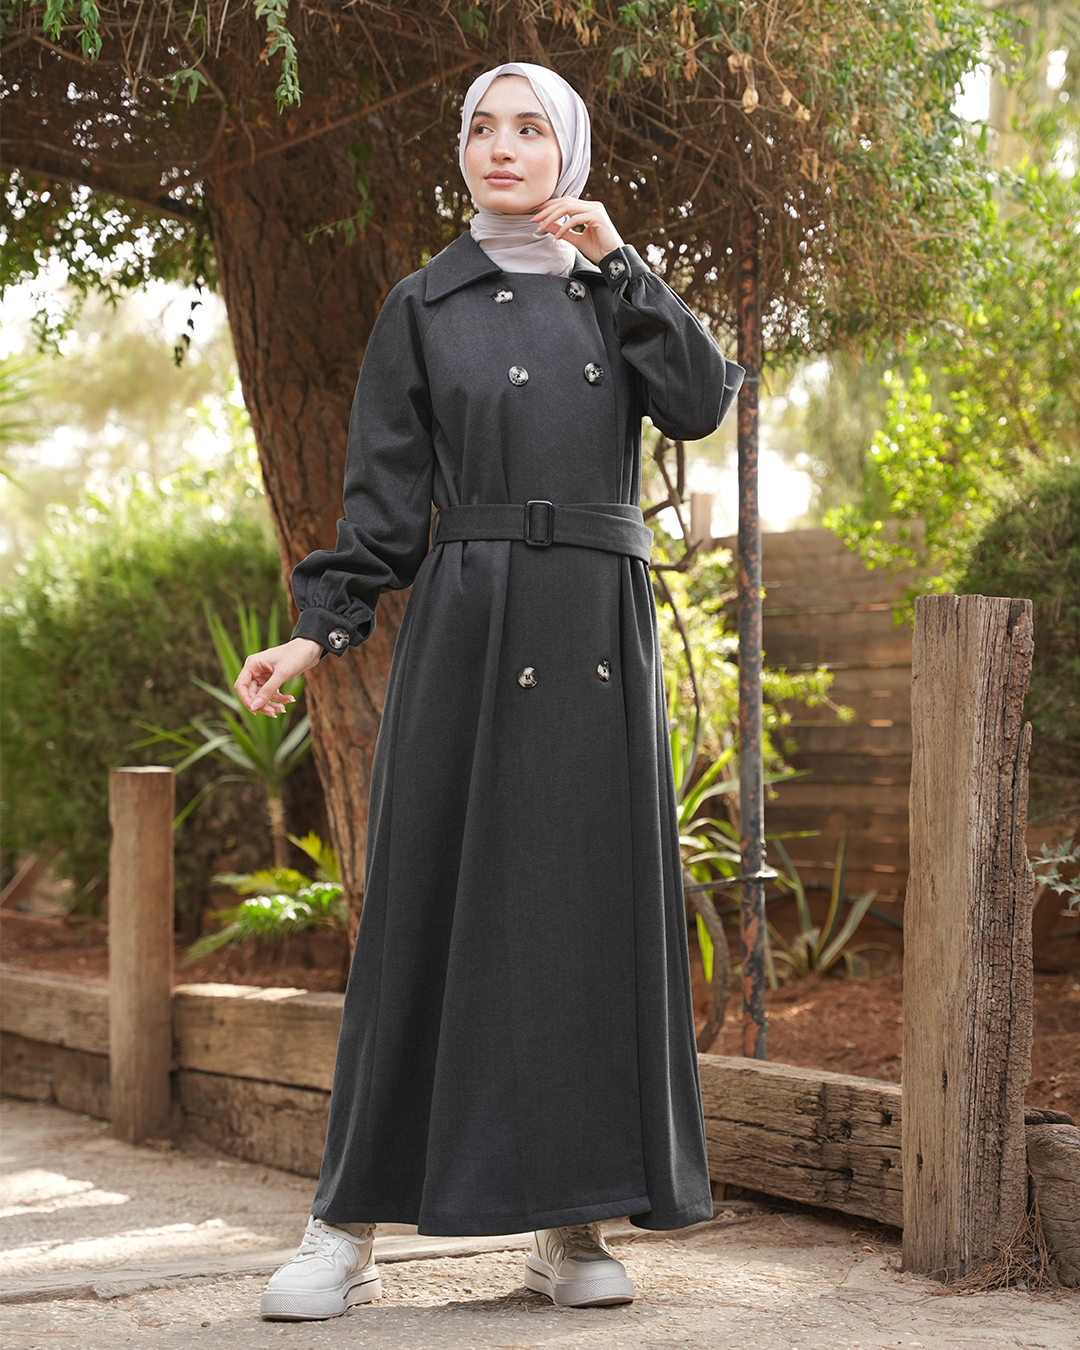 Jilbab Sophistication: Where Tradition Meets Contemporary Fashion